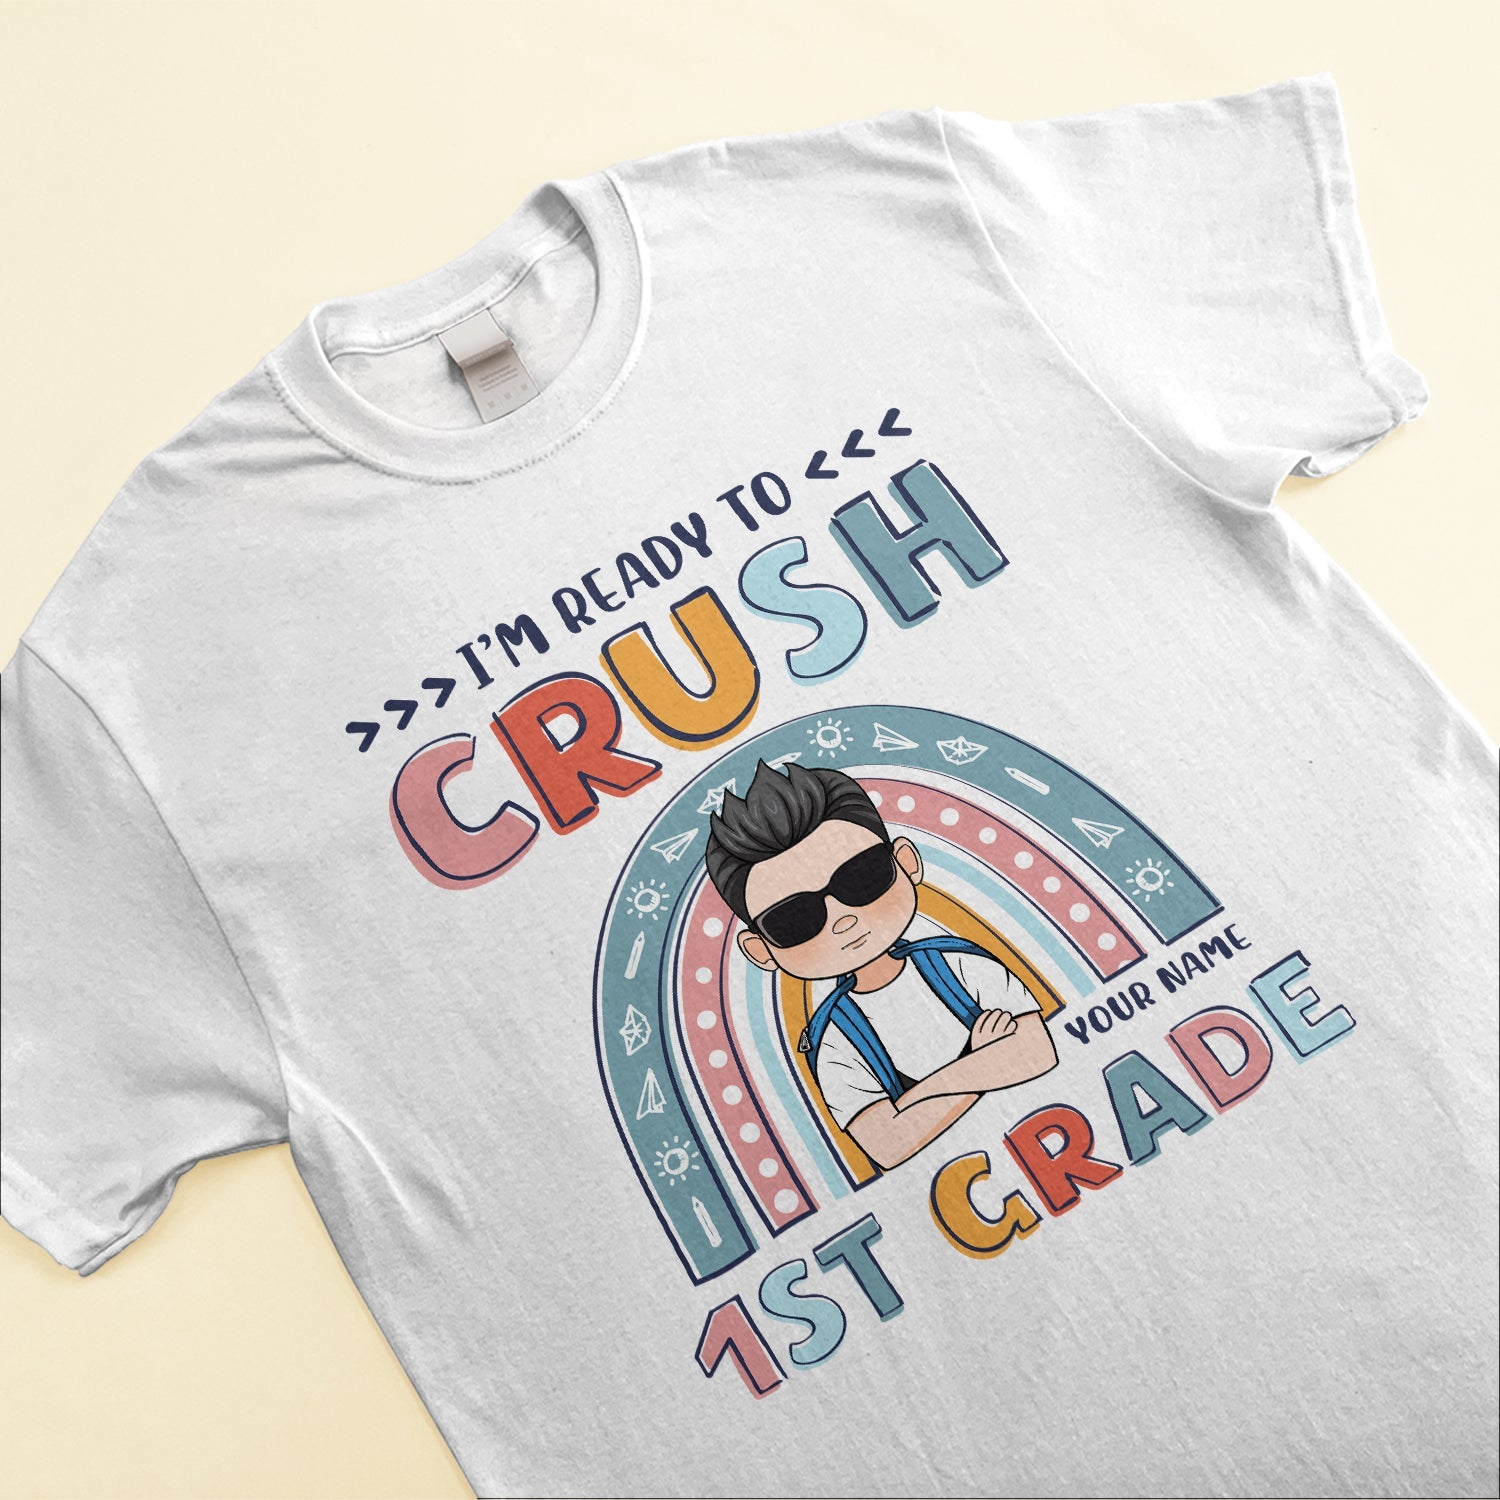 Iƒ??m Ready To Crush 1st Grade, Funny Custom Shirt, Preschool Gift For Kids-Macorner